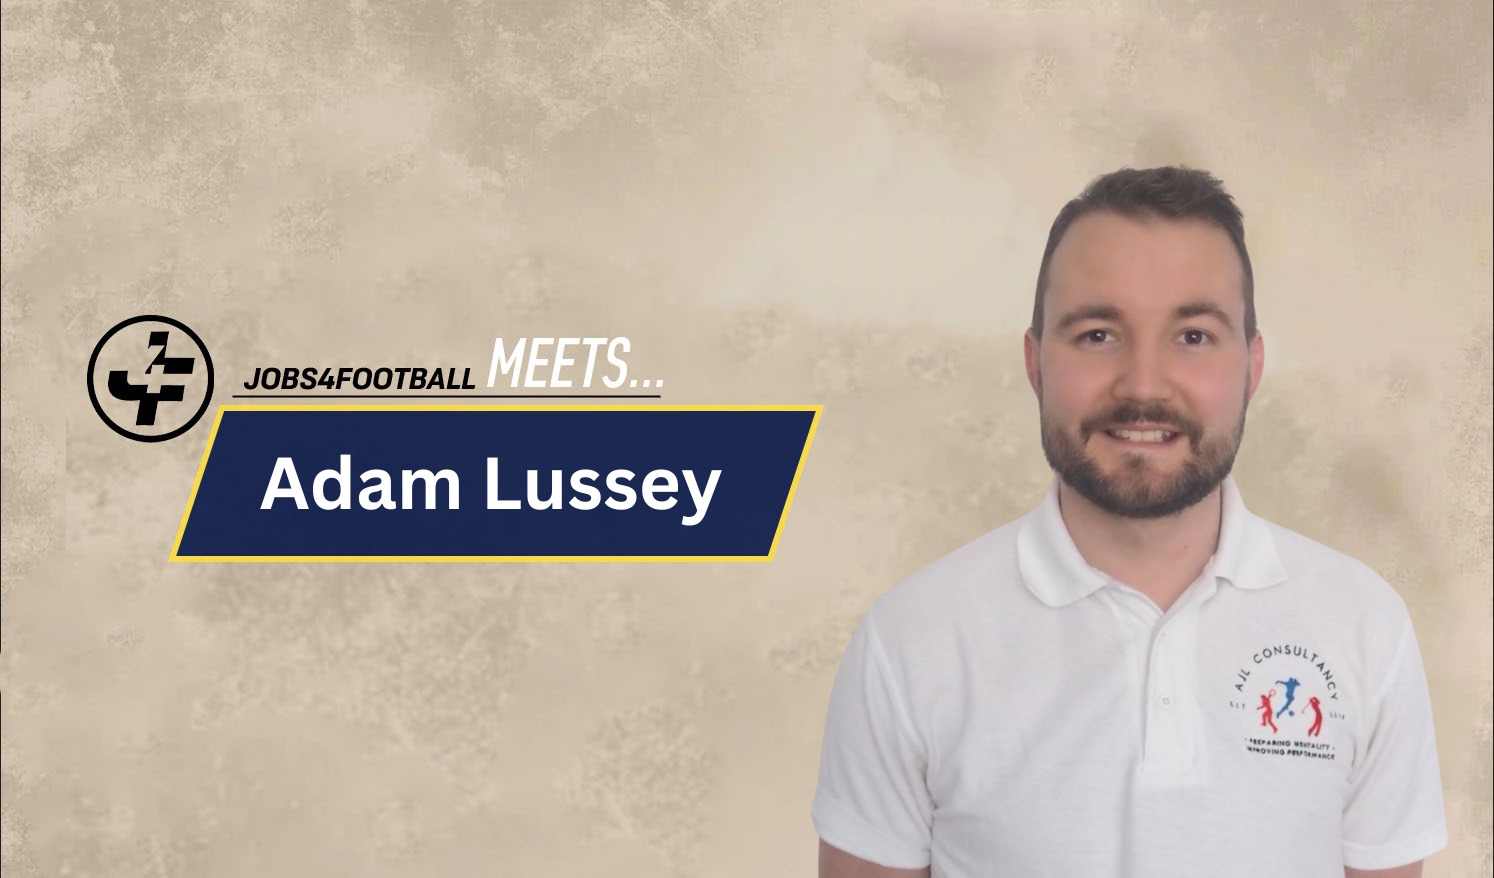 Jobs4football meets Adam Lussey of AJL Consultancy